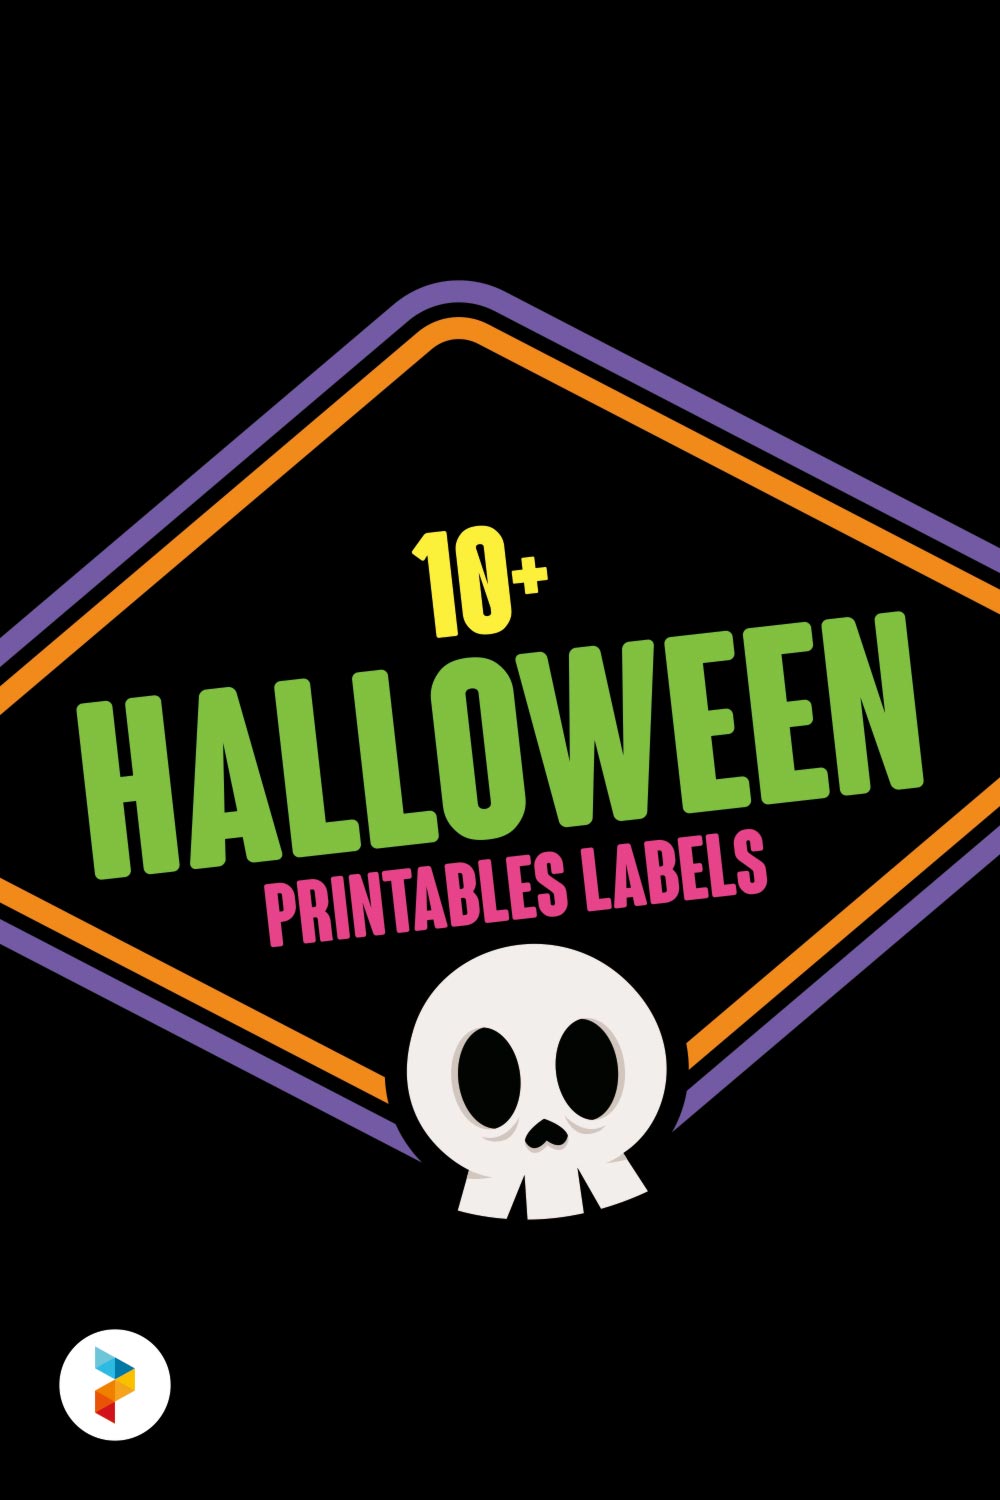 Halloween Printables Labels